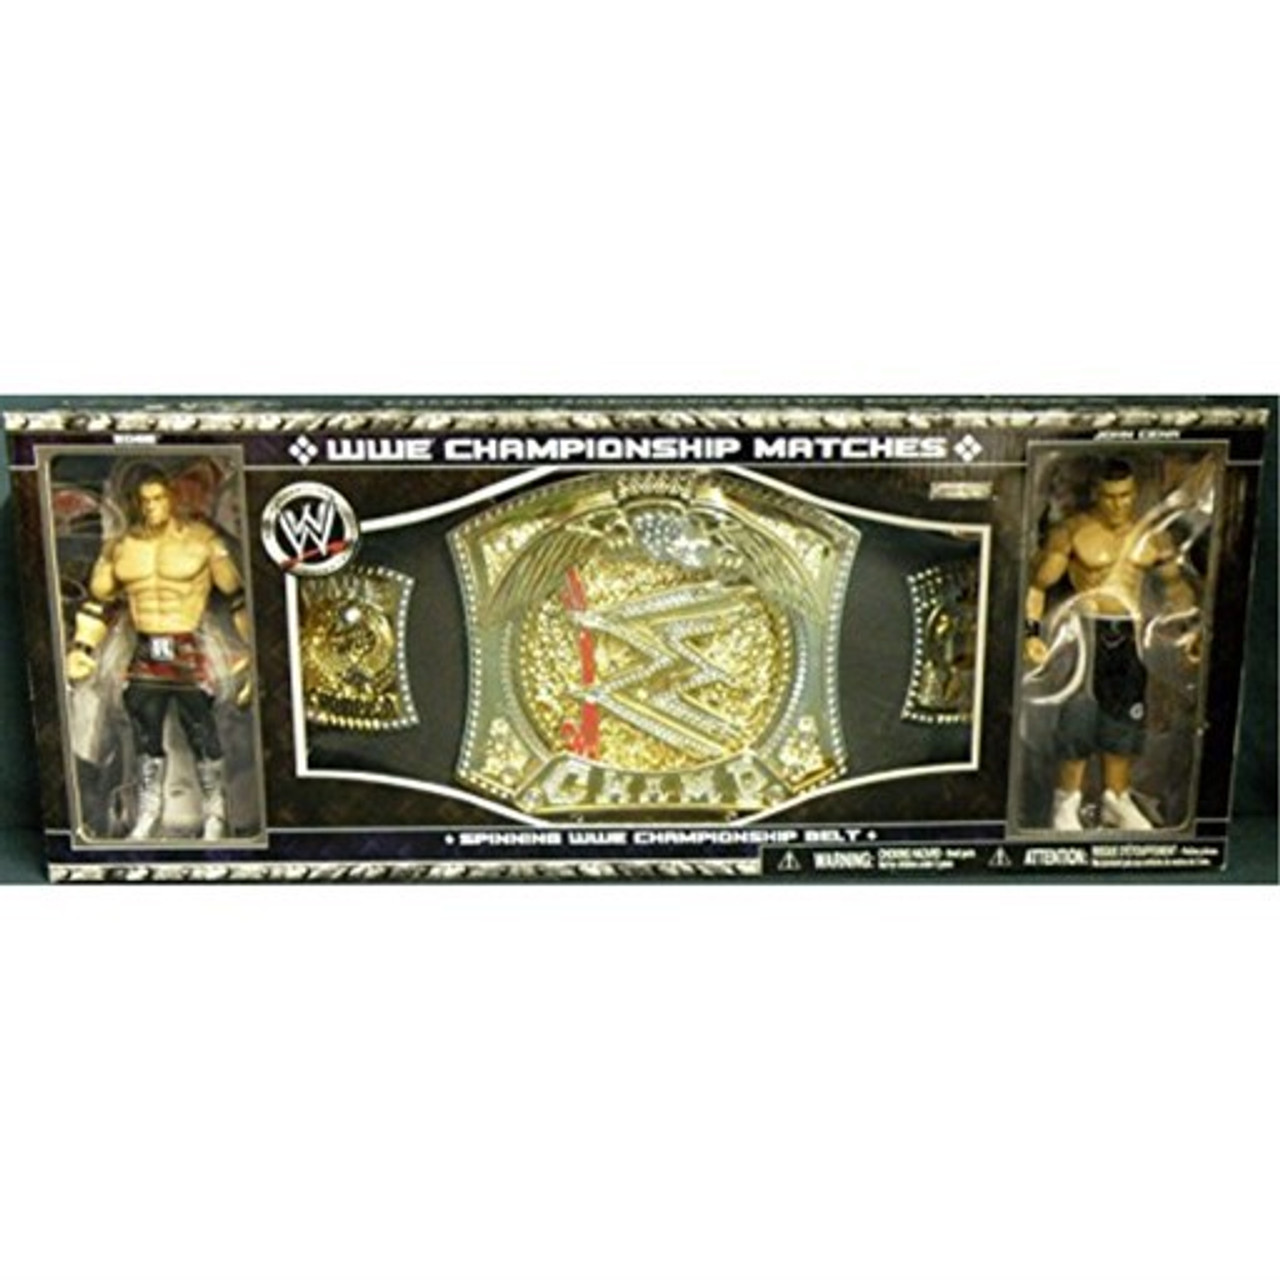 Wwe Wrestling Smackdown Draft Spinning Wwe Championship Belt Exclusive Action Figure Set John Cena Edge Jakks Pacific Toywiz